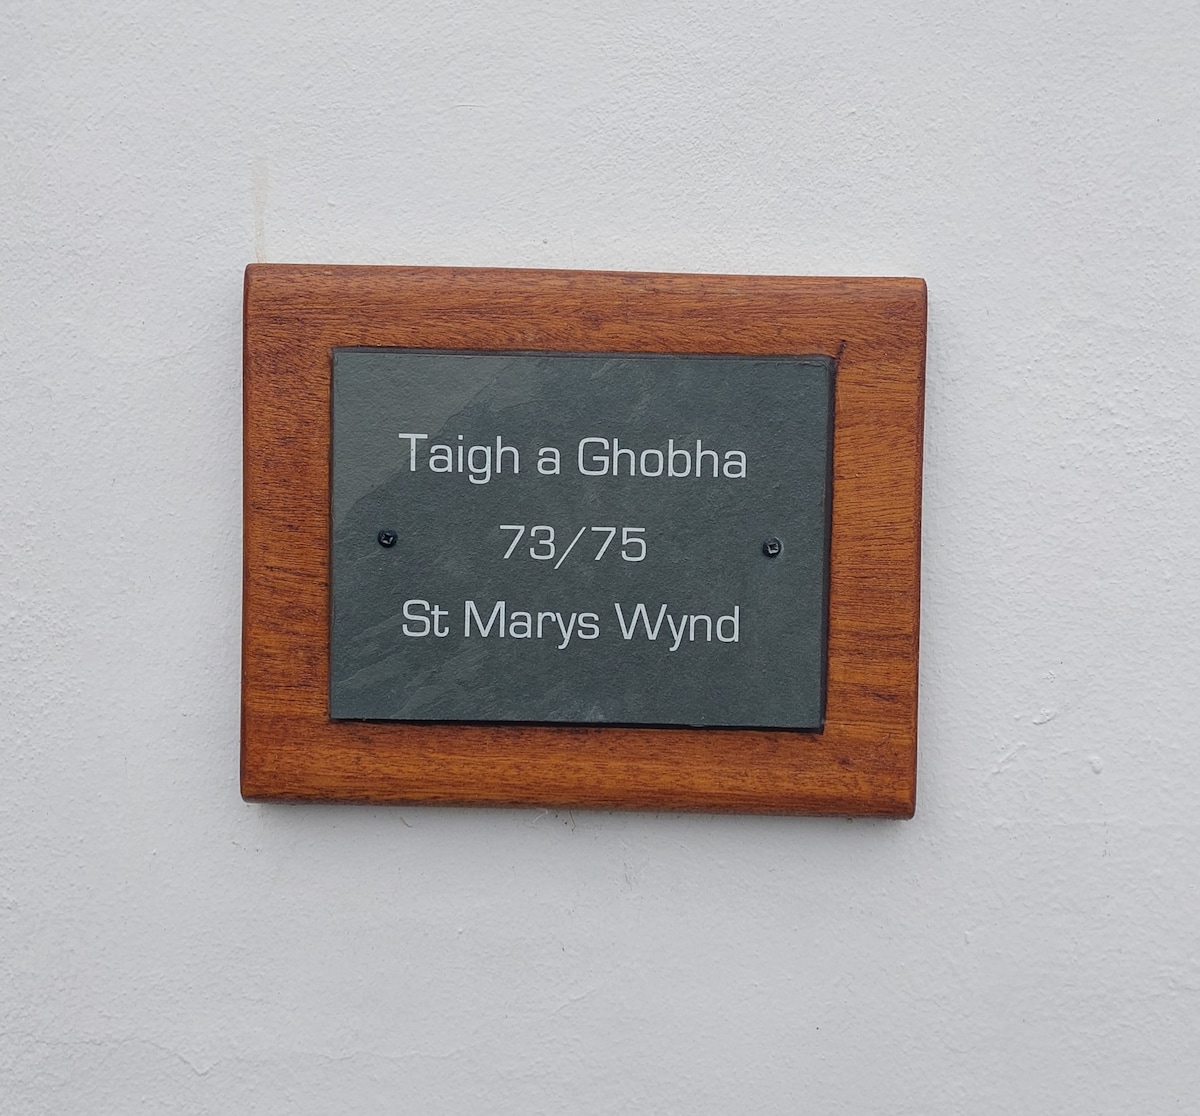 Taigh a Ghobha -'The Smithy'